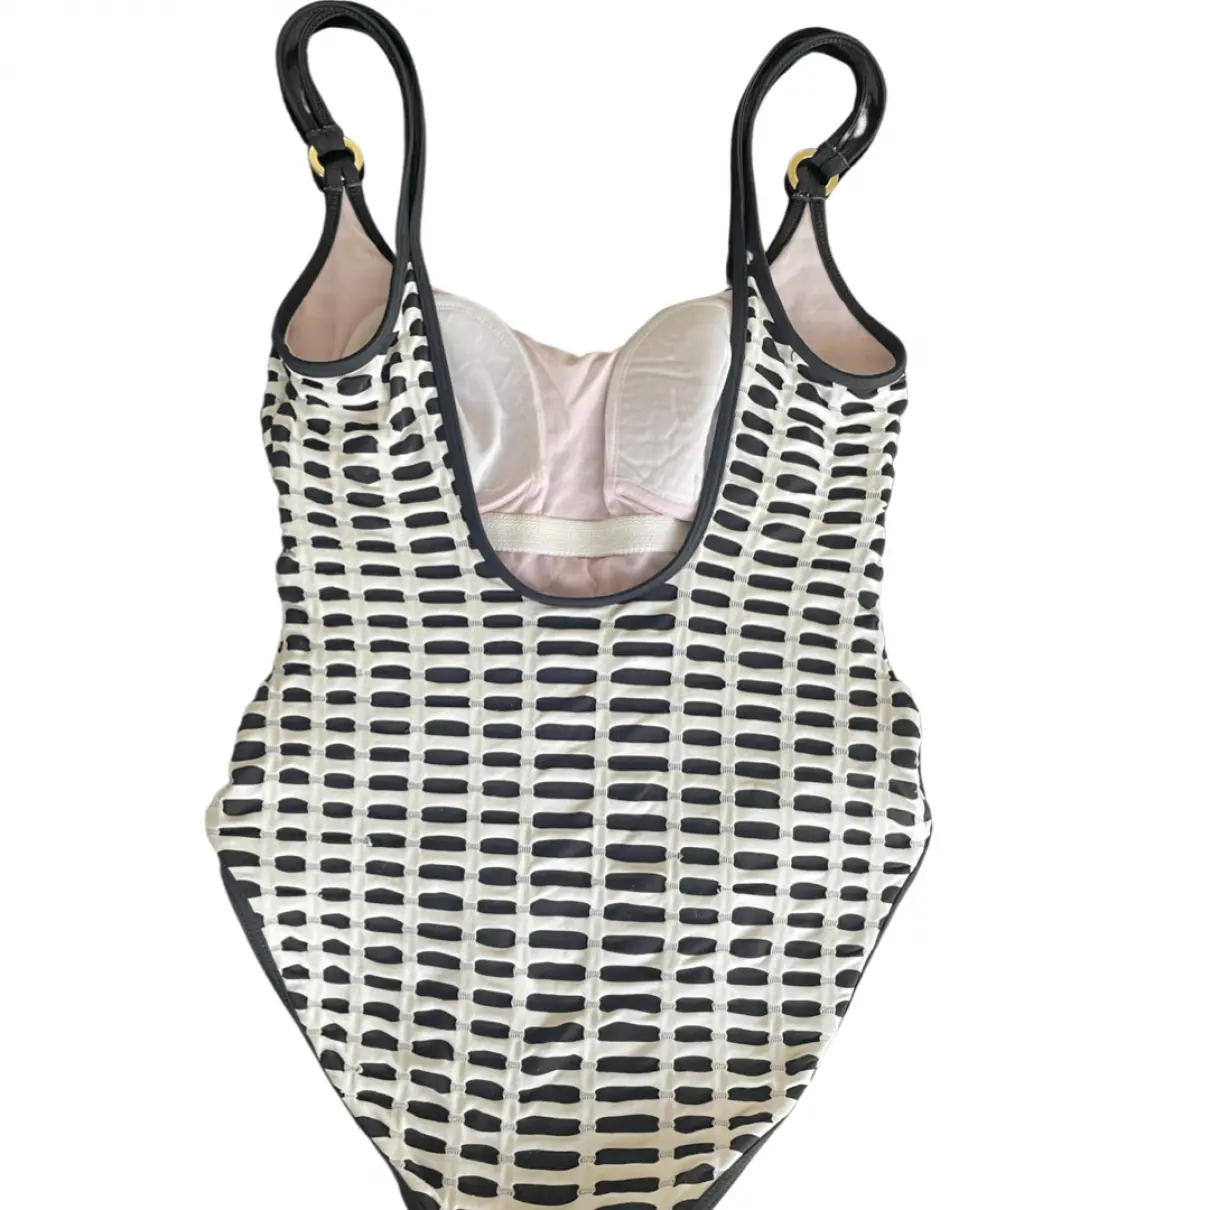 Buy St John One-piece swimsuit online - Vintage